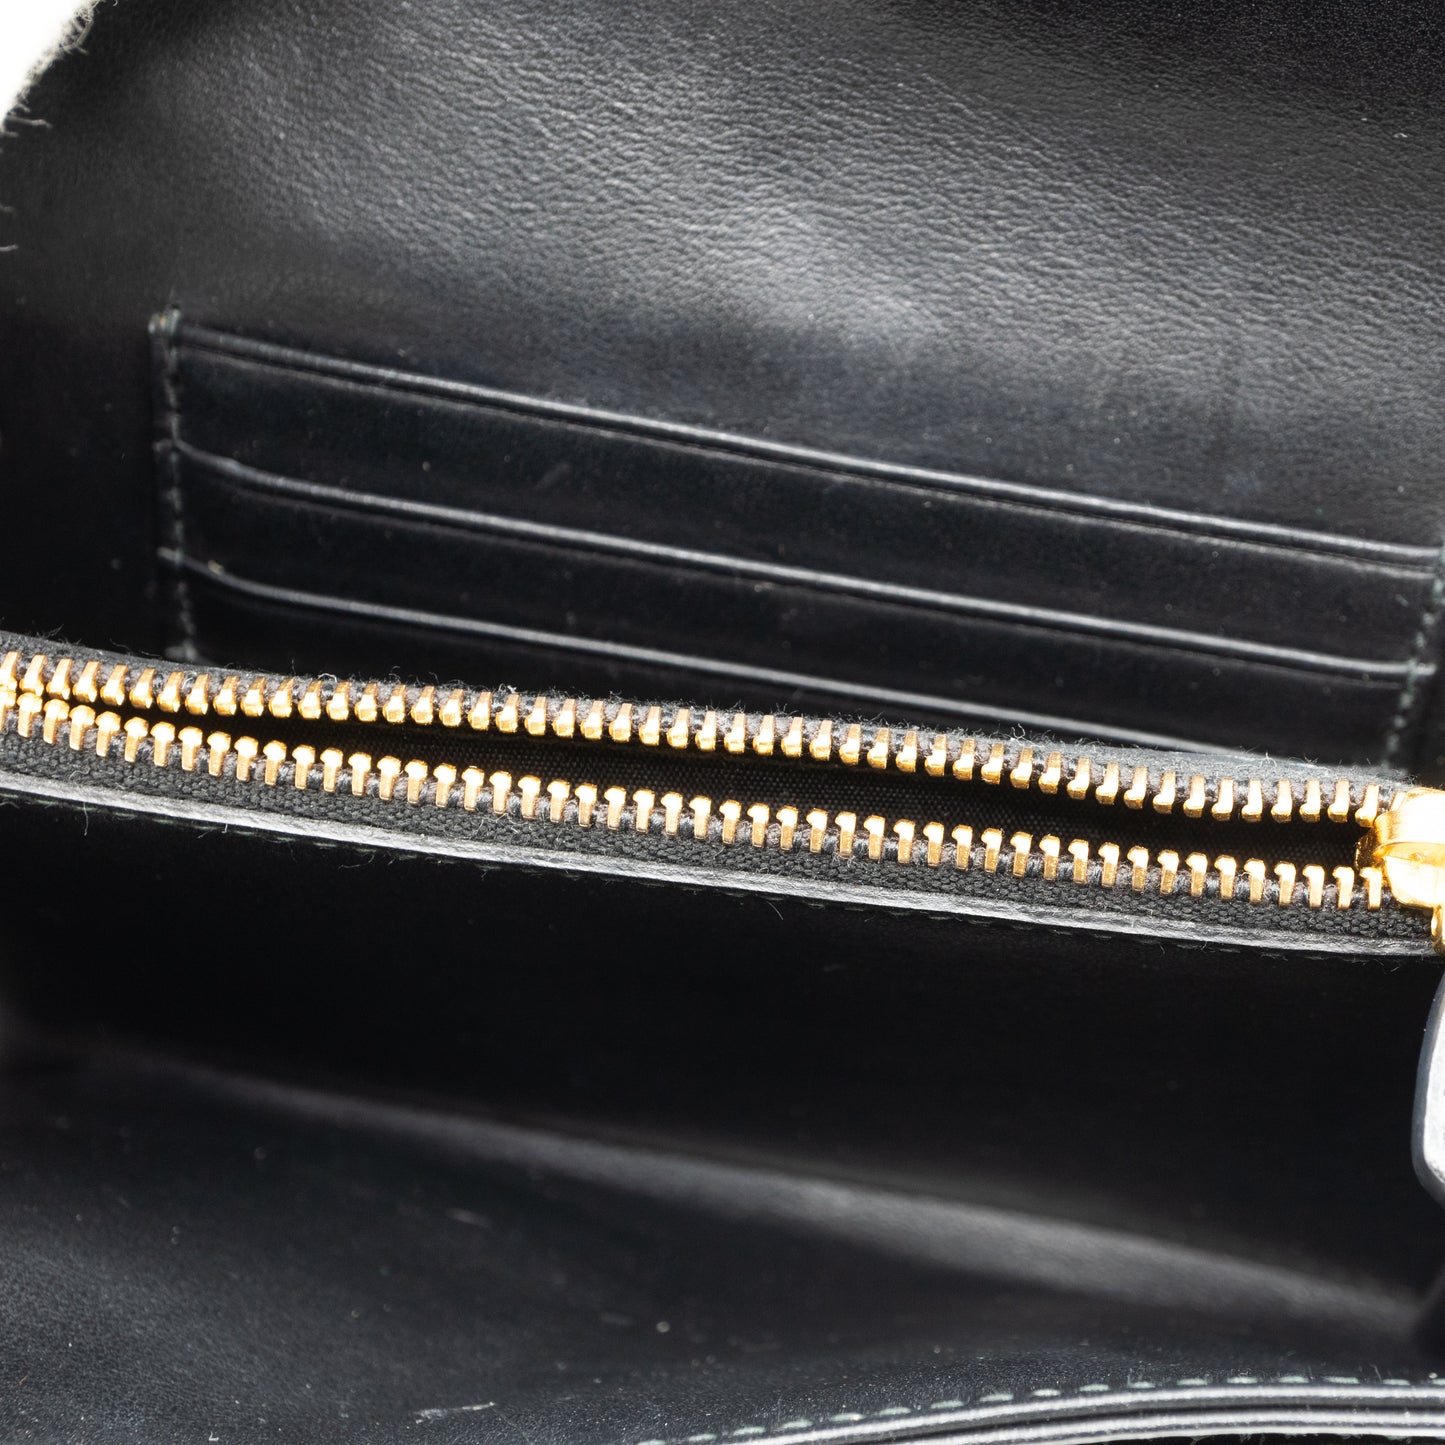 Leather Flap Nylon Wristlet Wallet Black